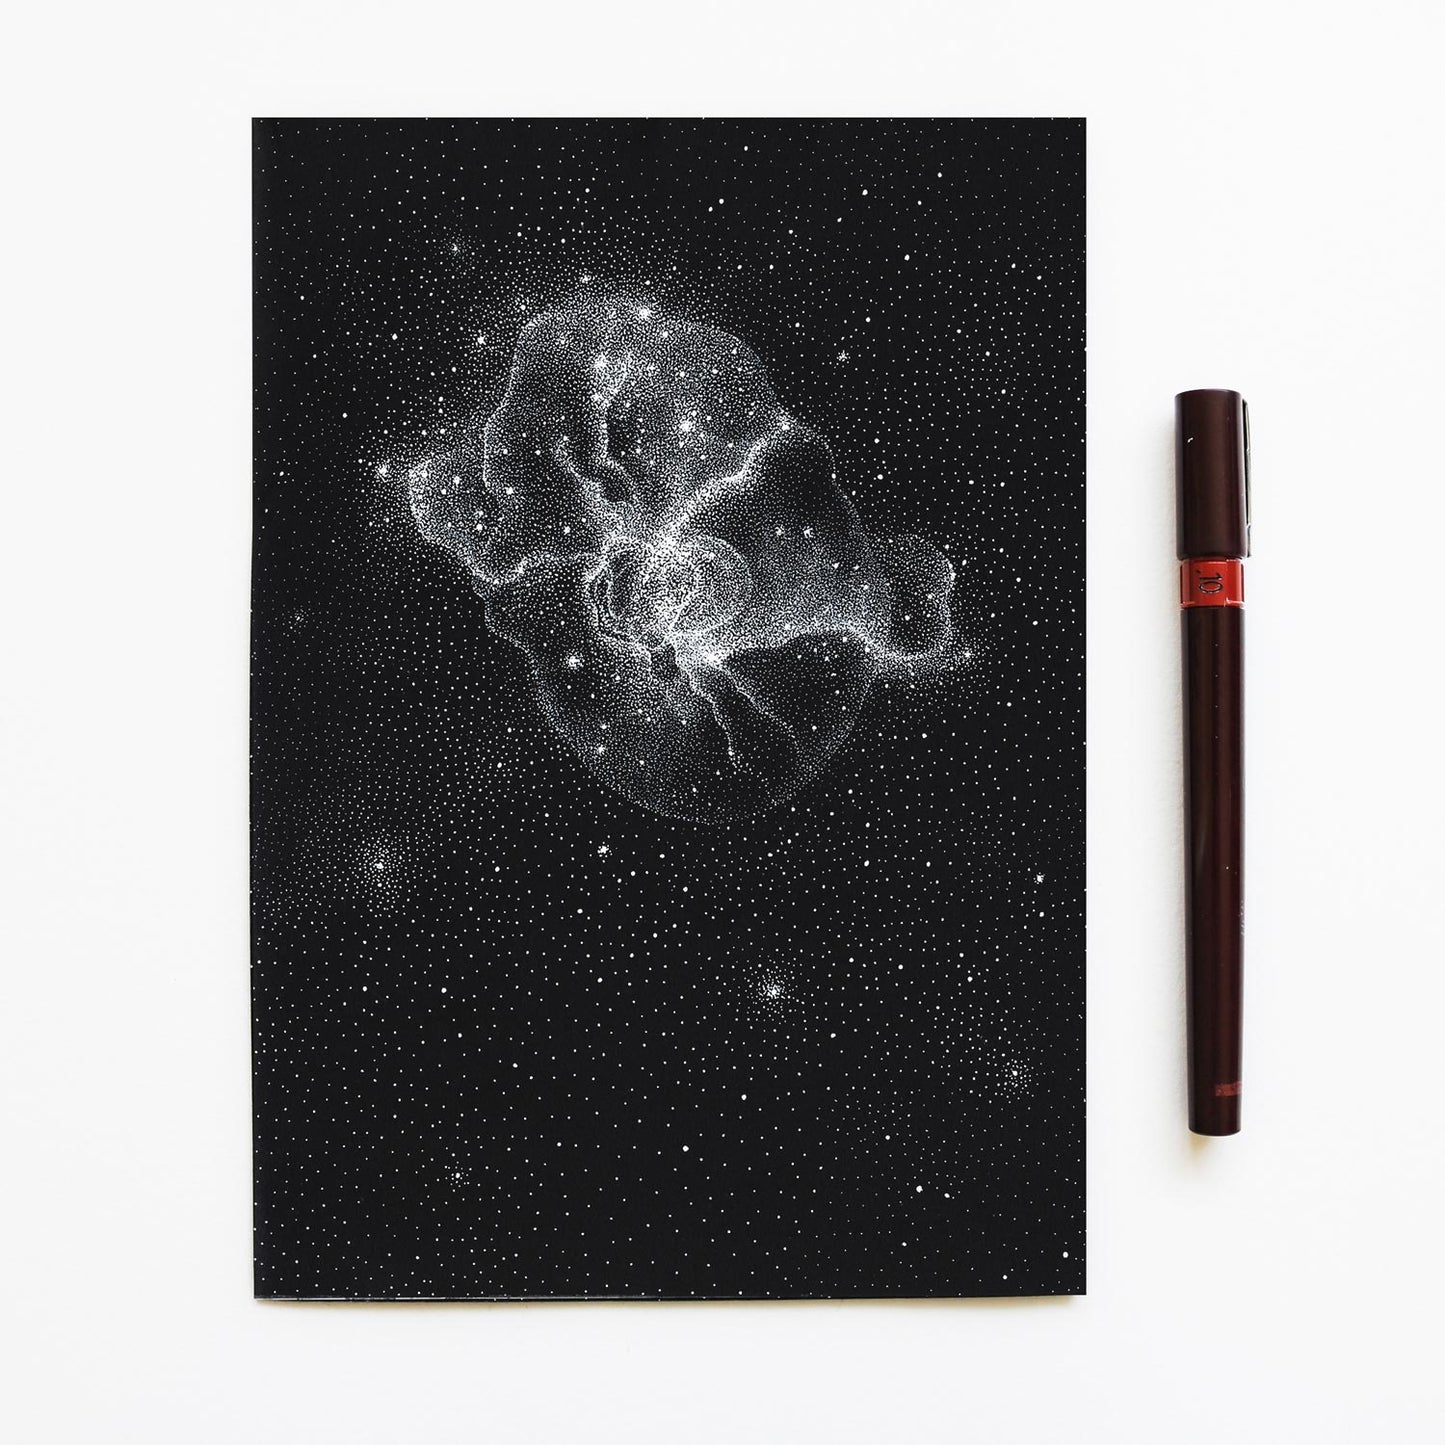 Nebula Nr. 6 - Original drawing